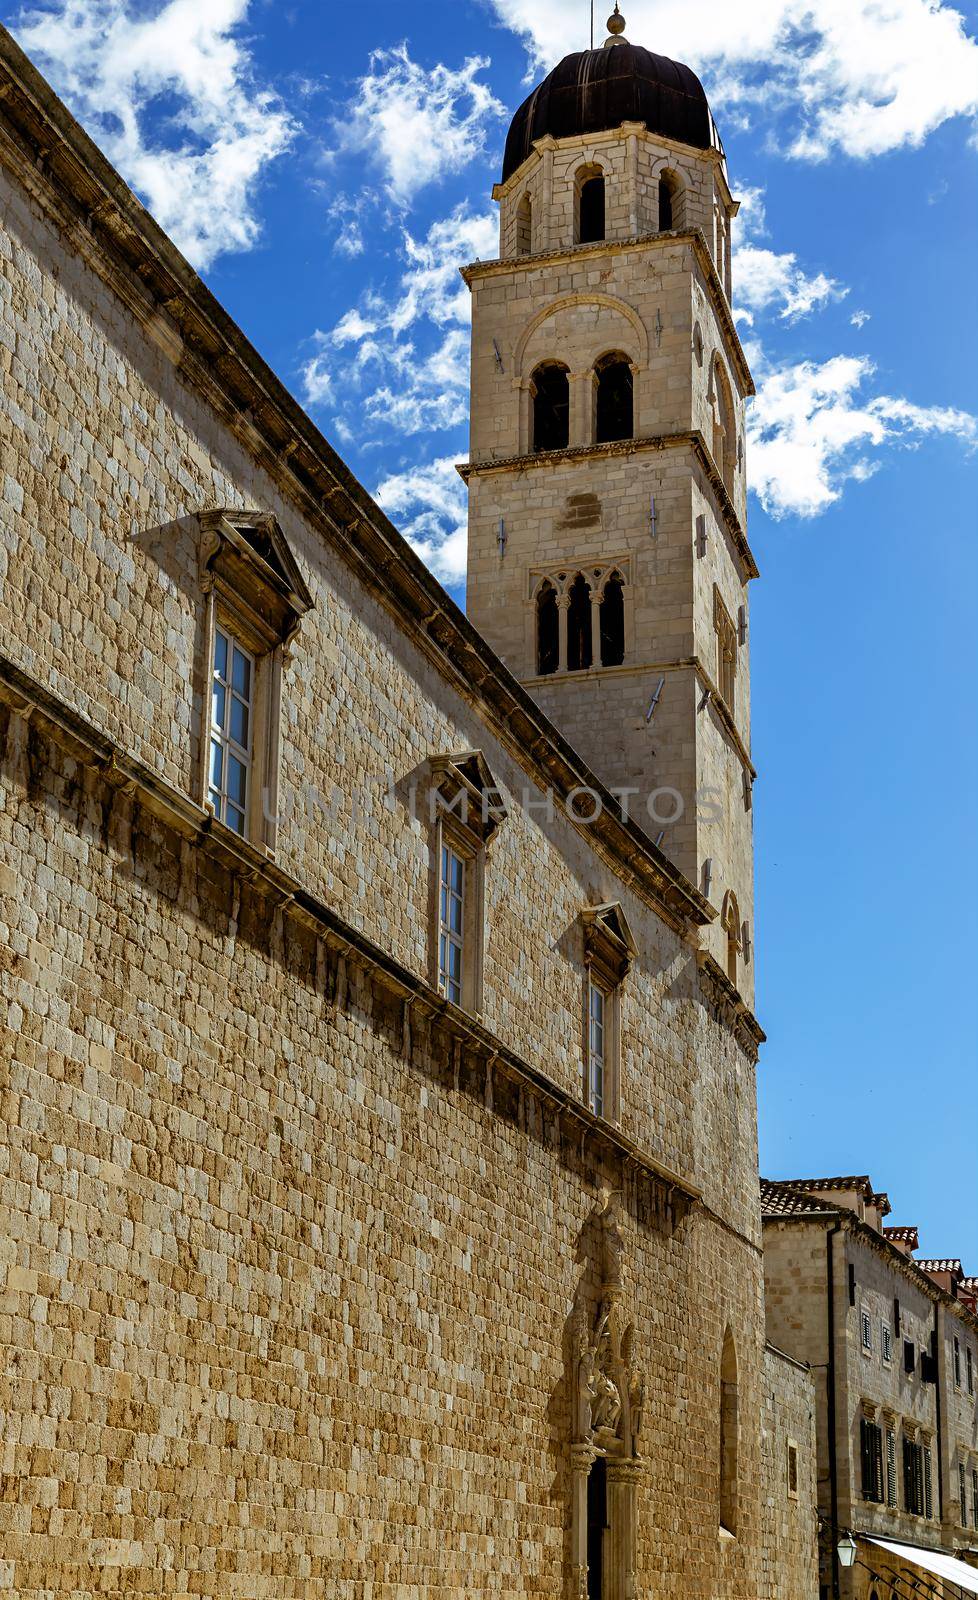 Dubrovnik City Bell Tower on Stradun, Croatia